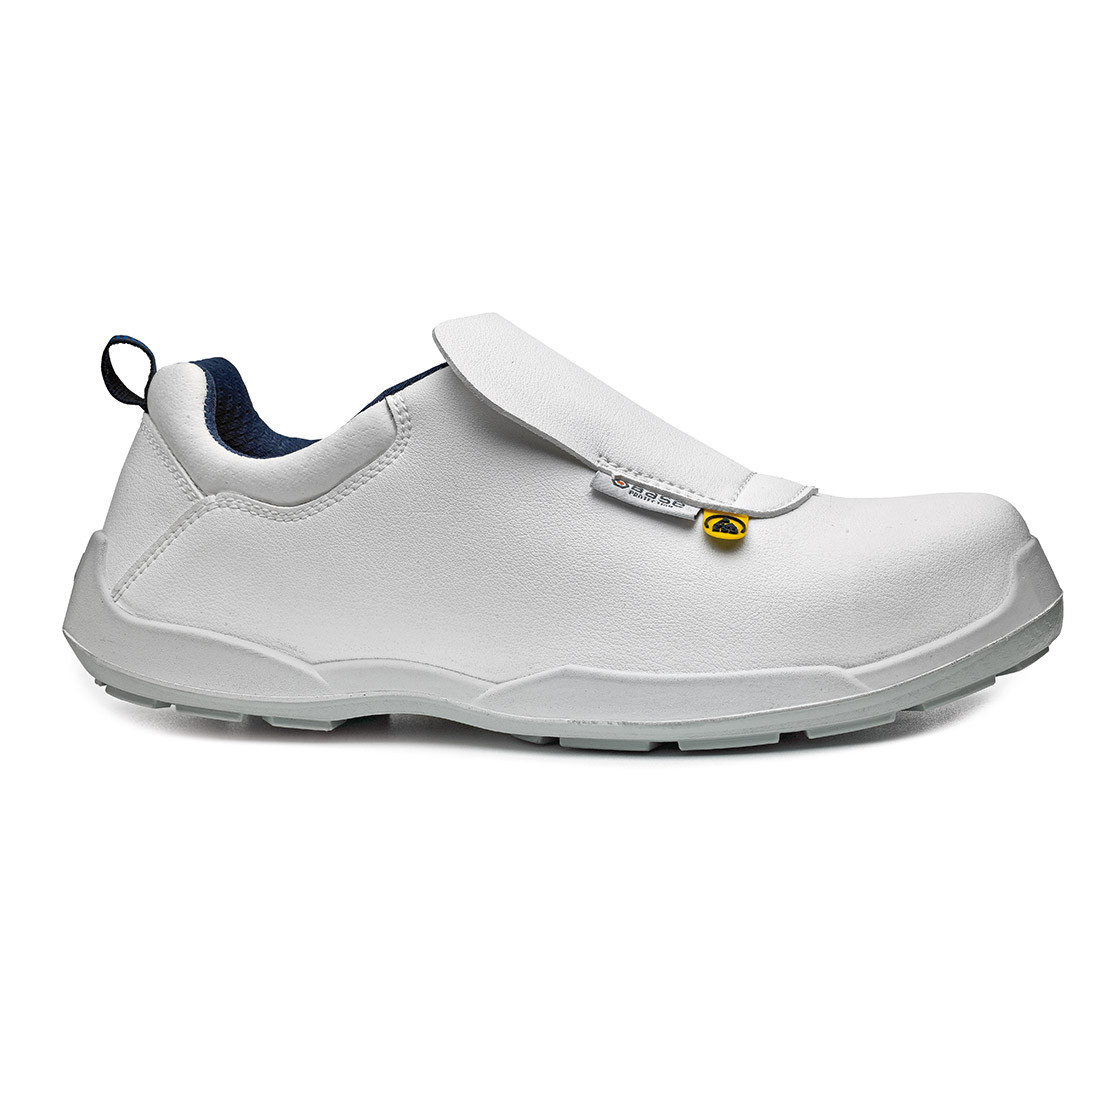 Bob Shoe S3 ESD SRC - Calzado de protección